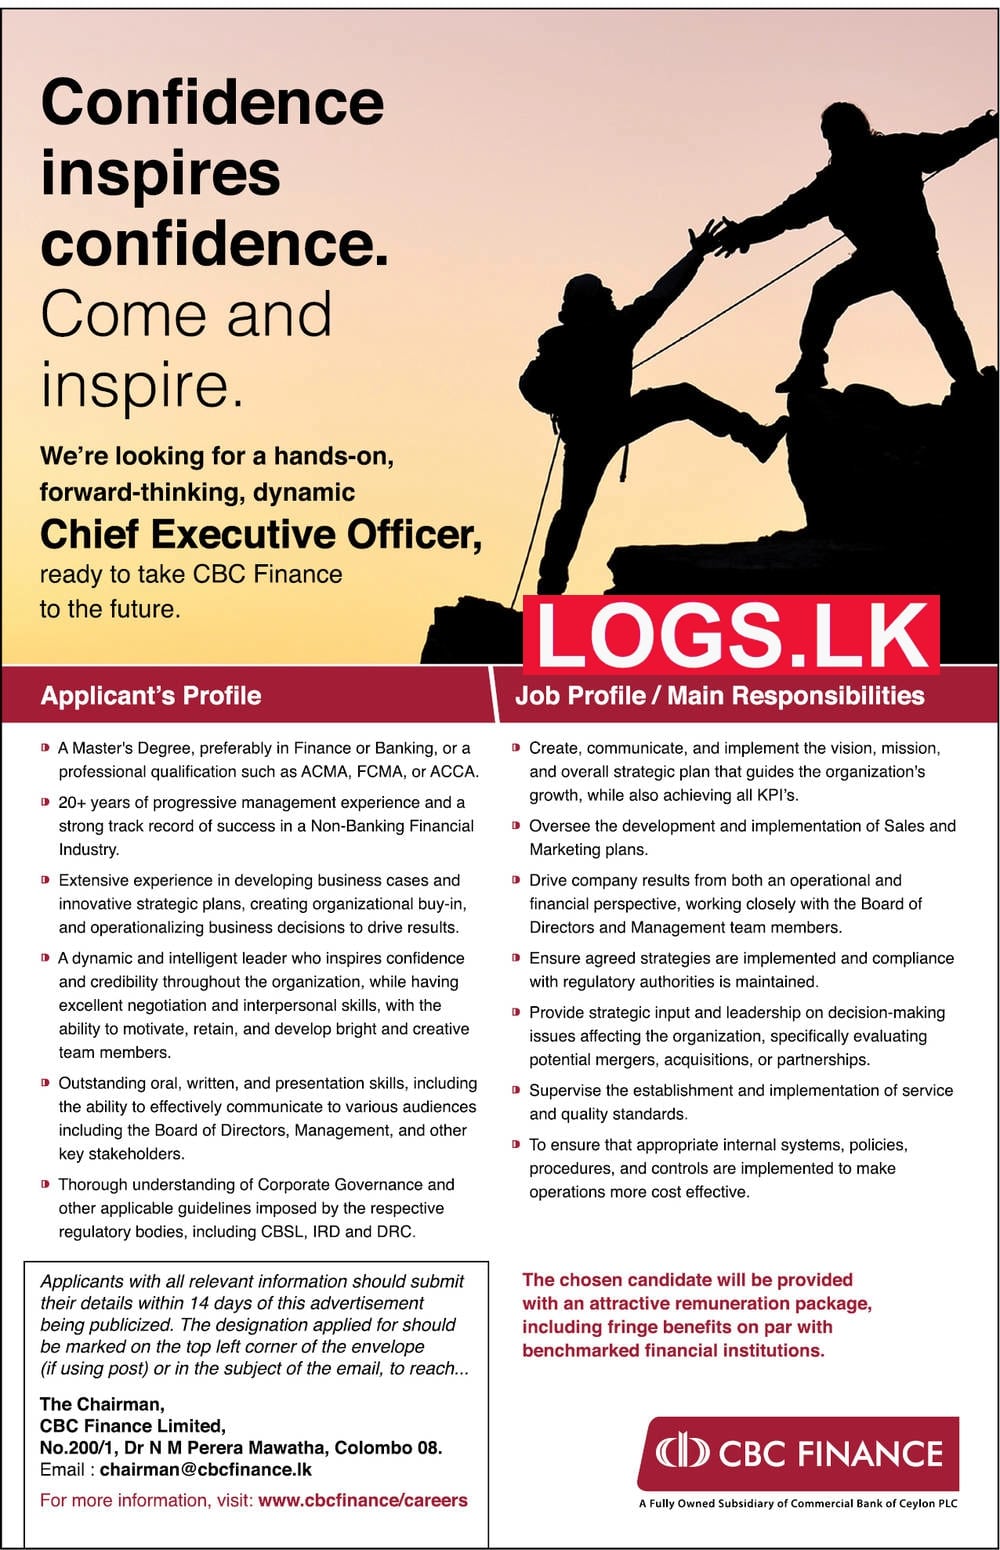 Chief Executive Officer Job Vacancy at CBC Finance Job Vacancies in Sri Lanka